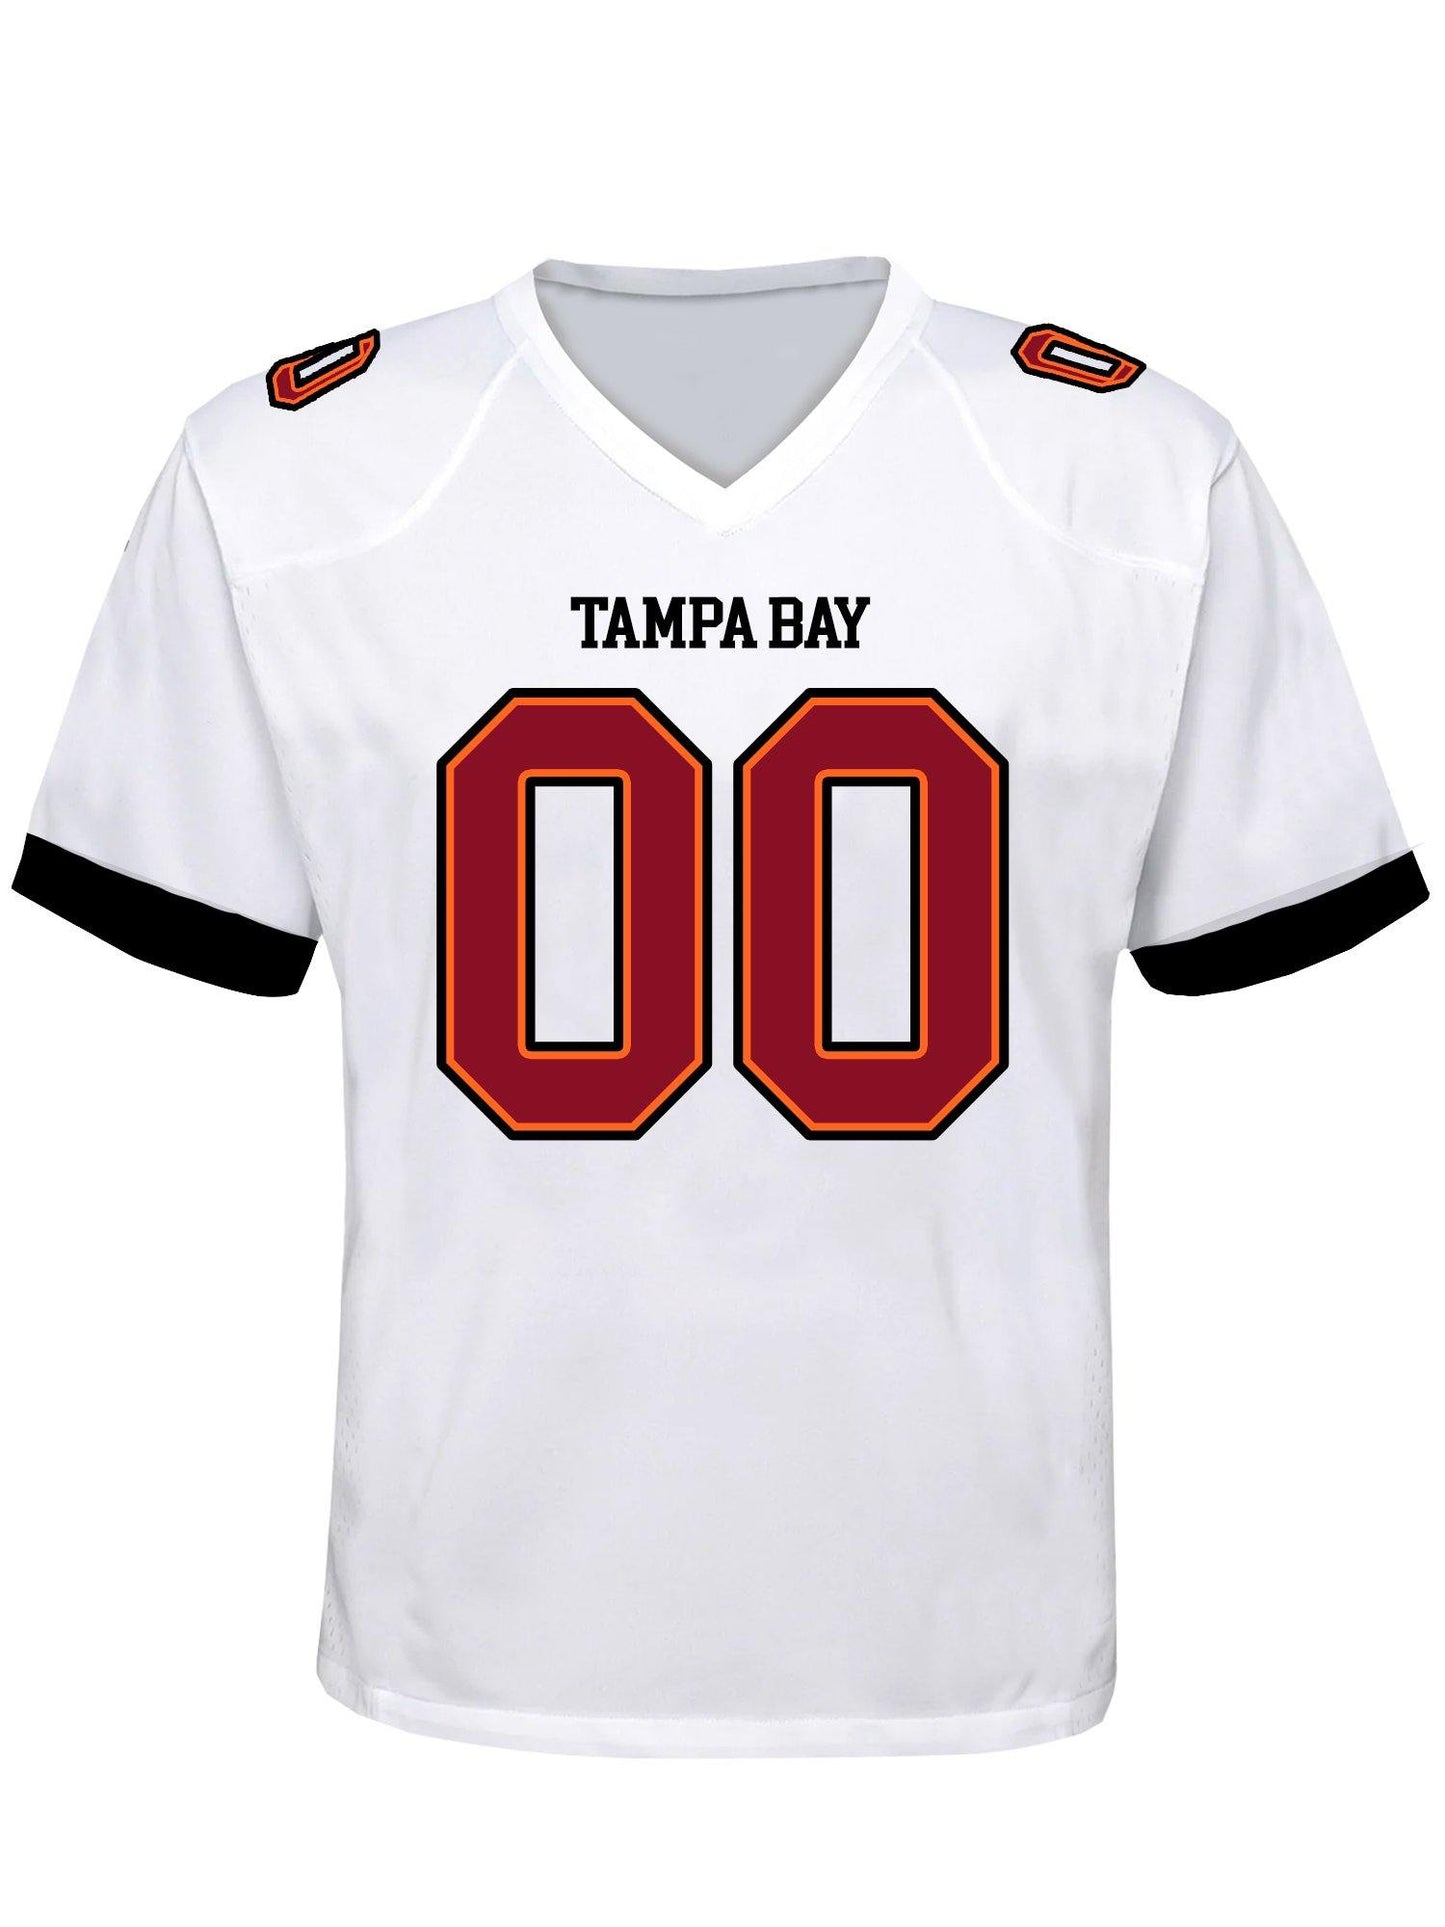 Tampa Bay Custom Football Jersey - USA Made Dropship